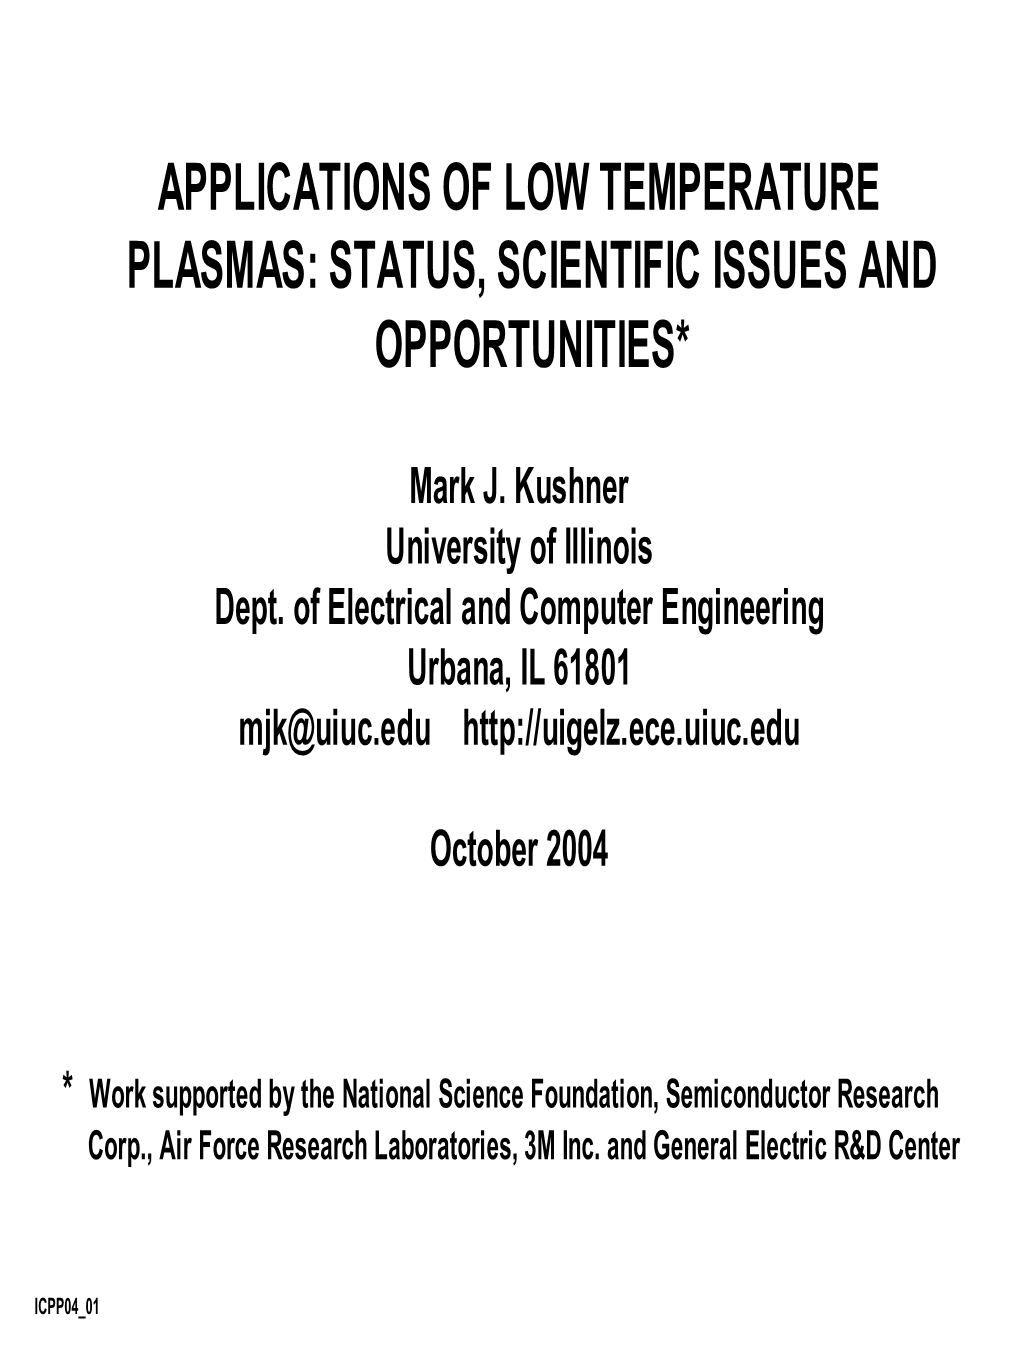 Applications of Low Temperature Plasmas: Status, Scientific Issues and Opportunities*